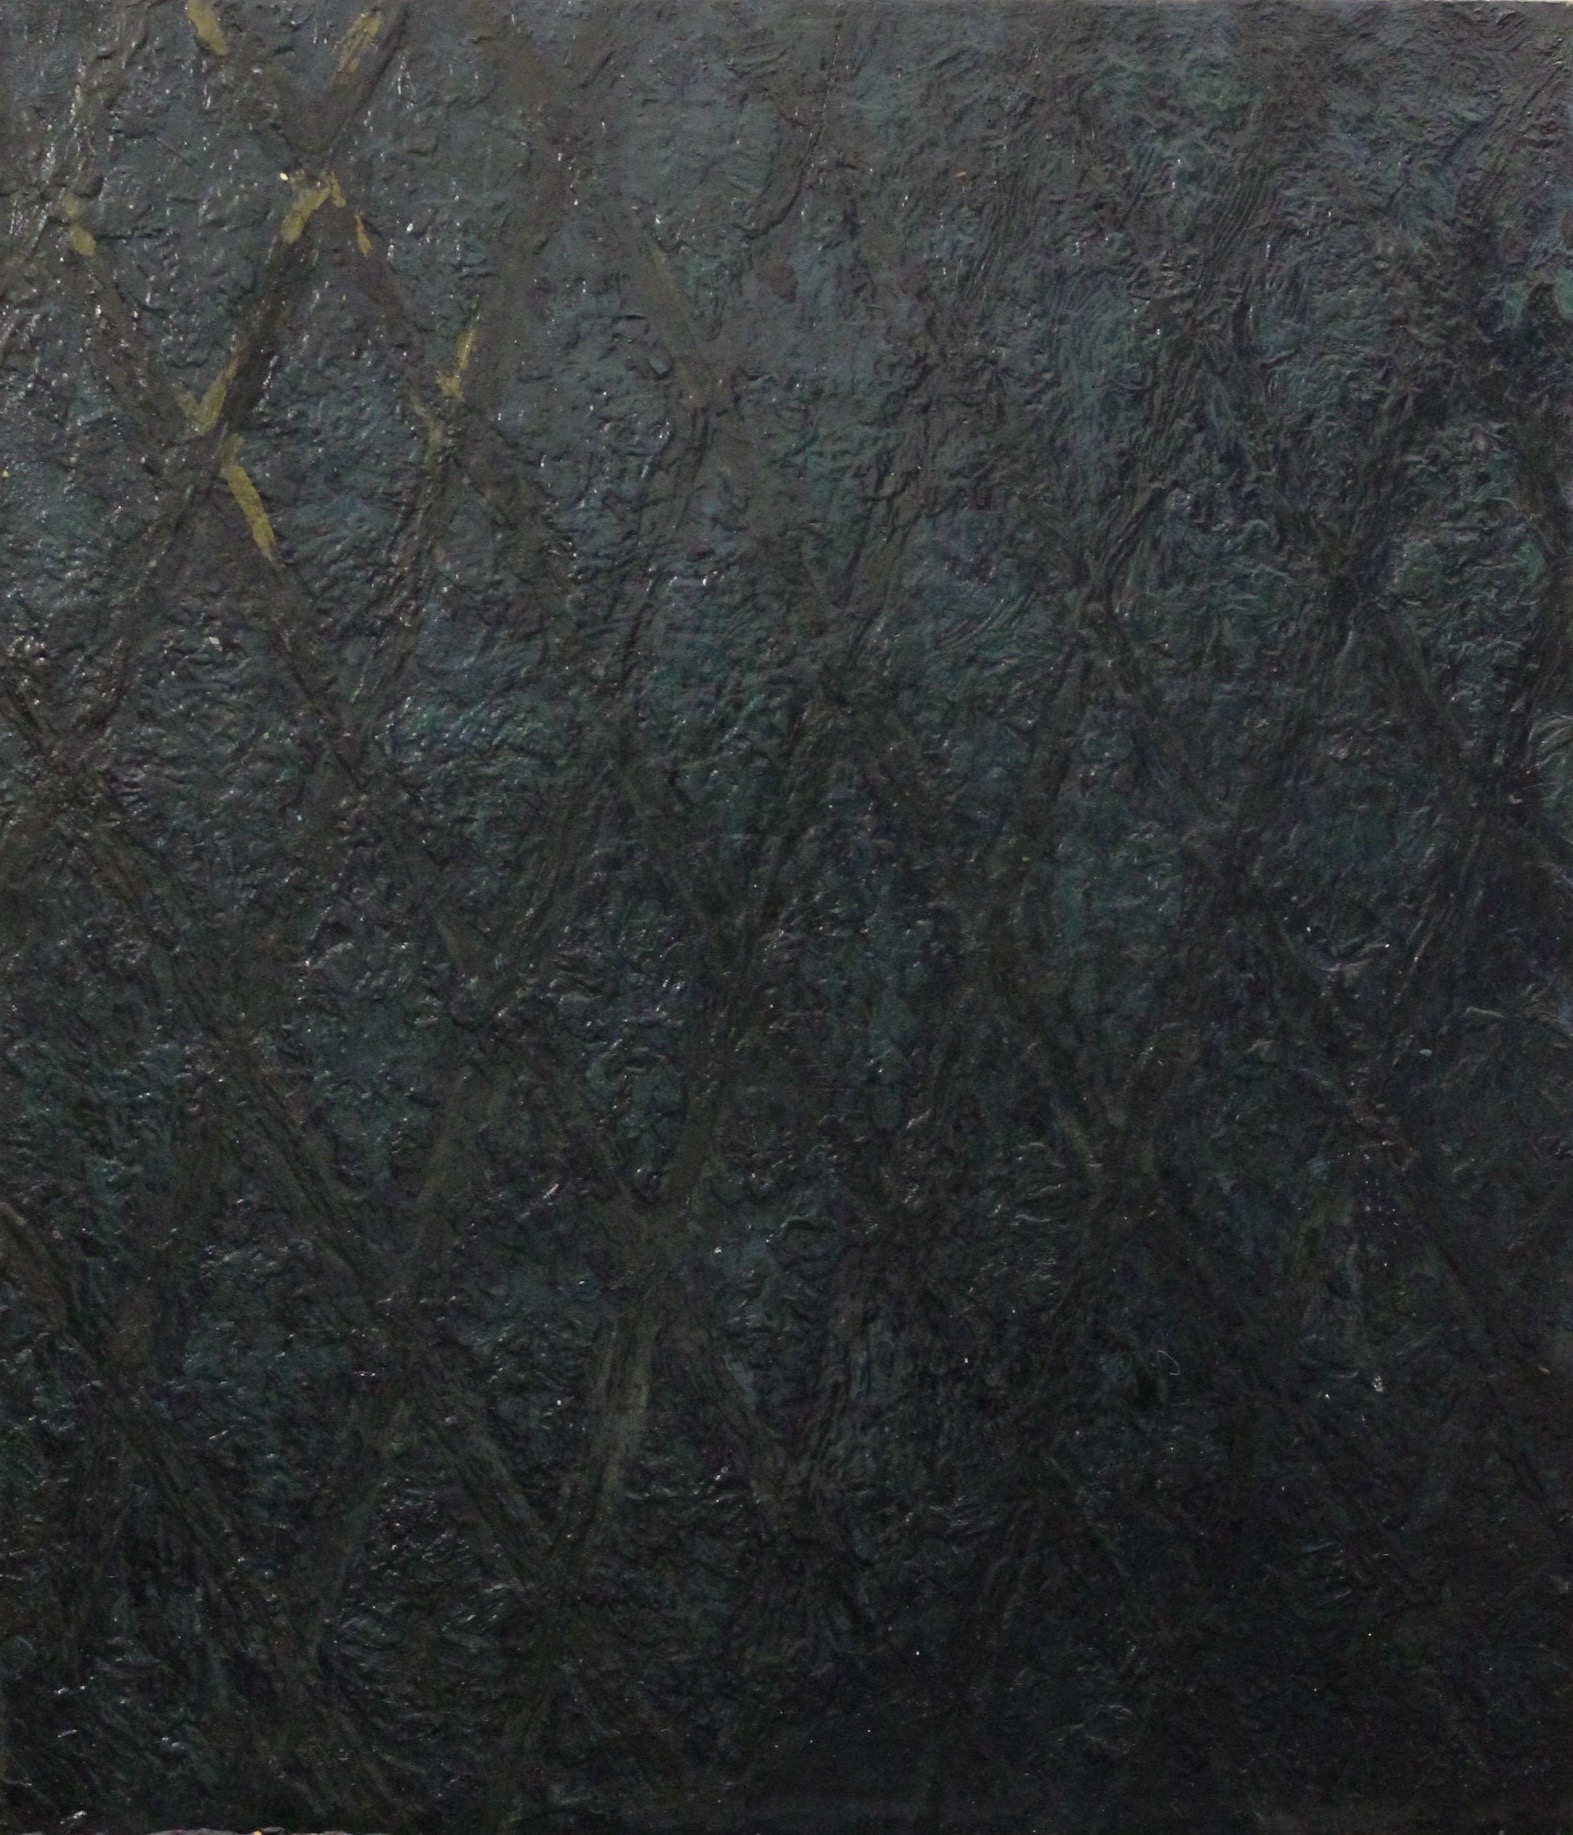 'Wallpaper' Tim Patrick Oil on Copper, 26x23cm, 2015